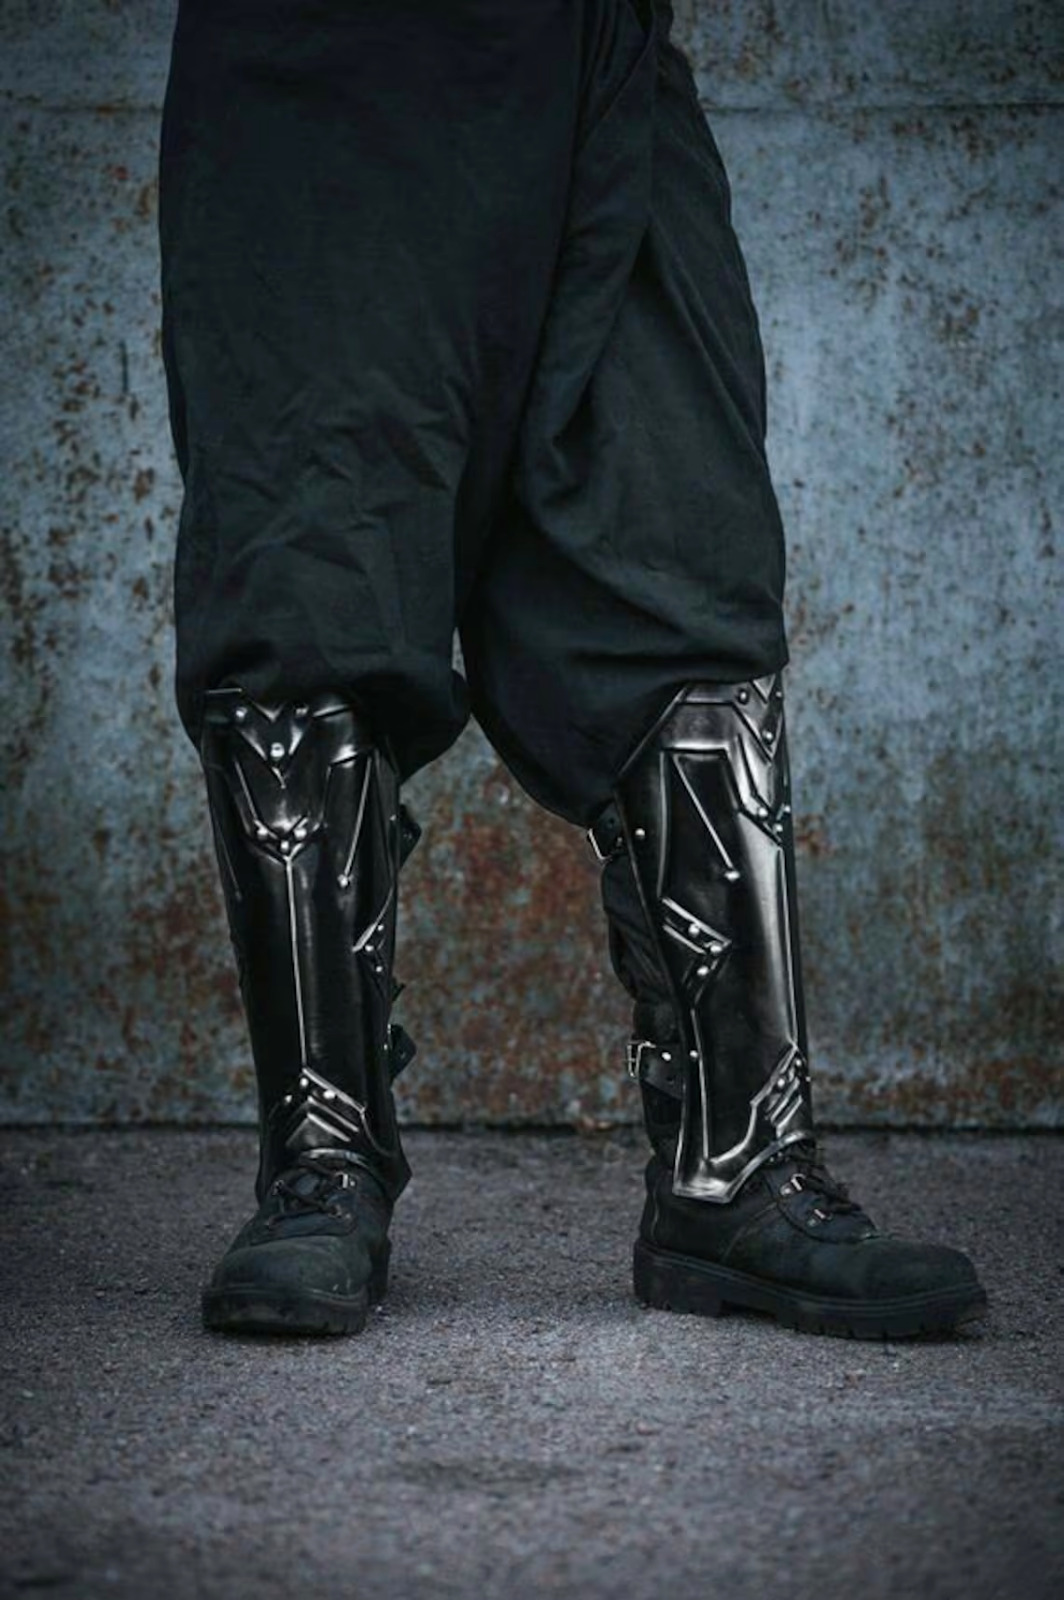 Medieva LARP Armor Legs Protection - Blackened Dwarf Style Greaves - Steel Armor